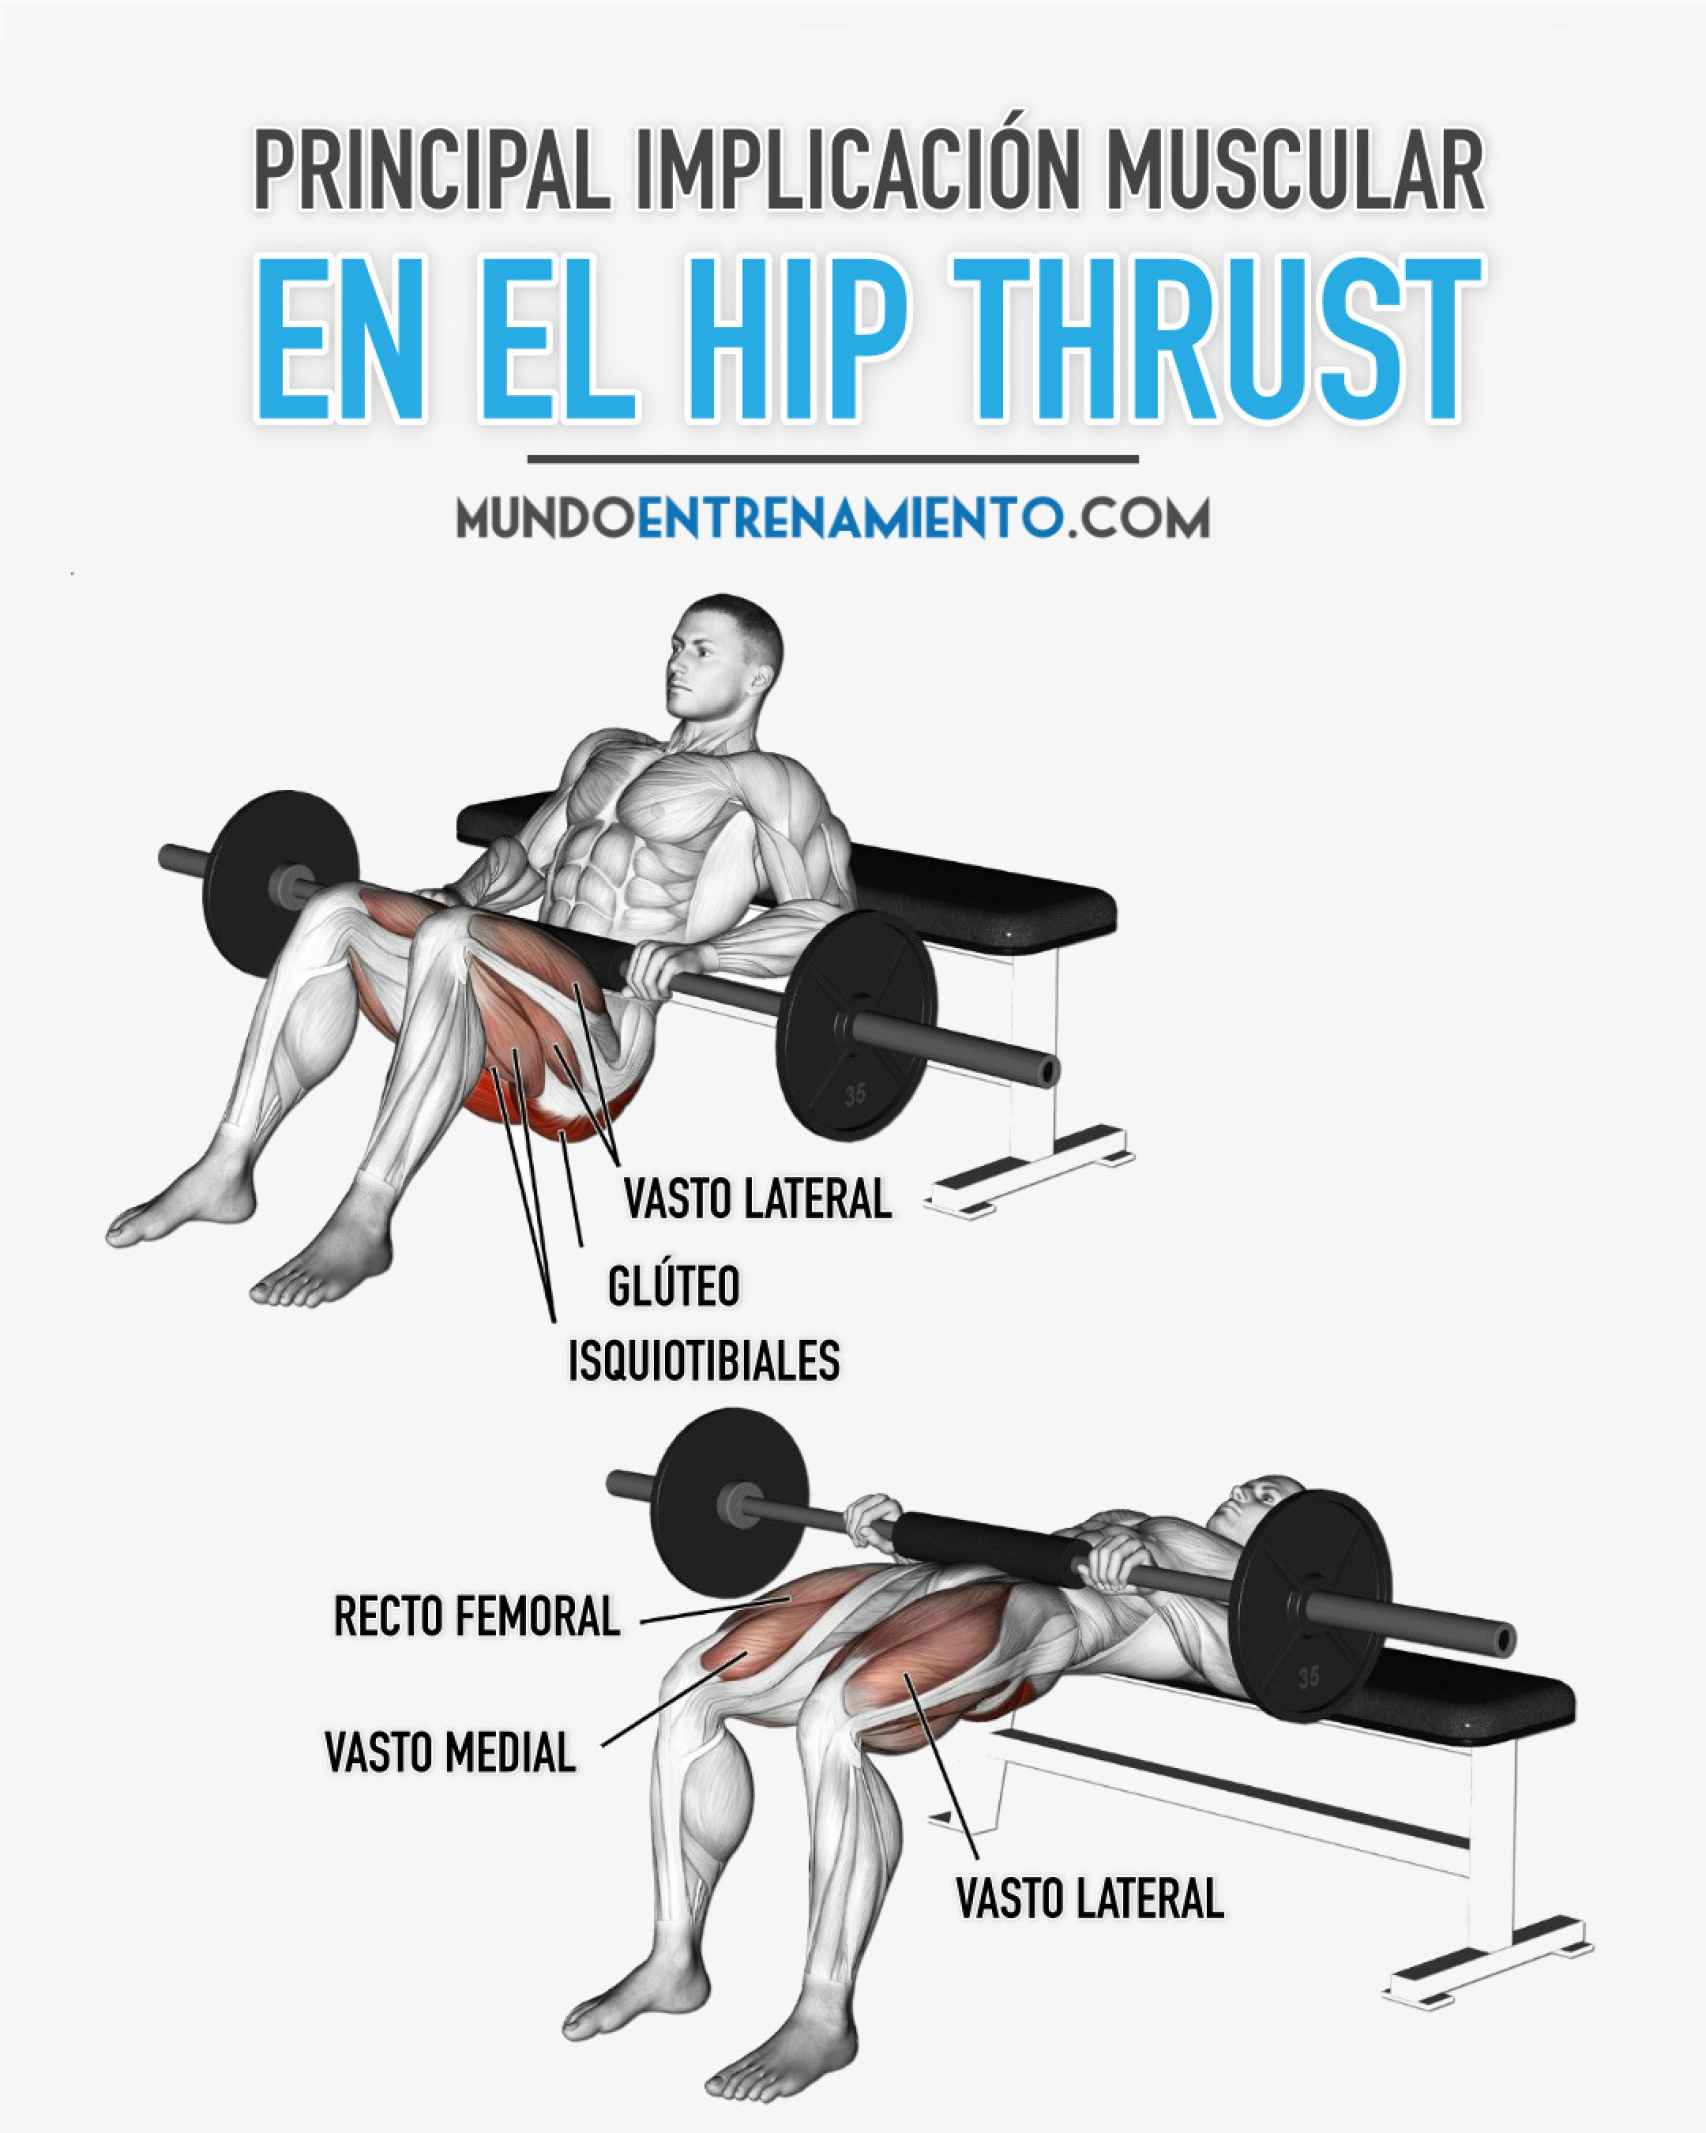 Principal musculatura implicada en el hip thrust